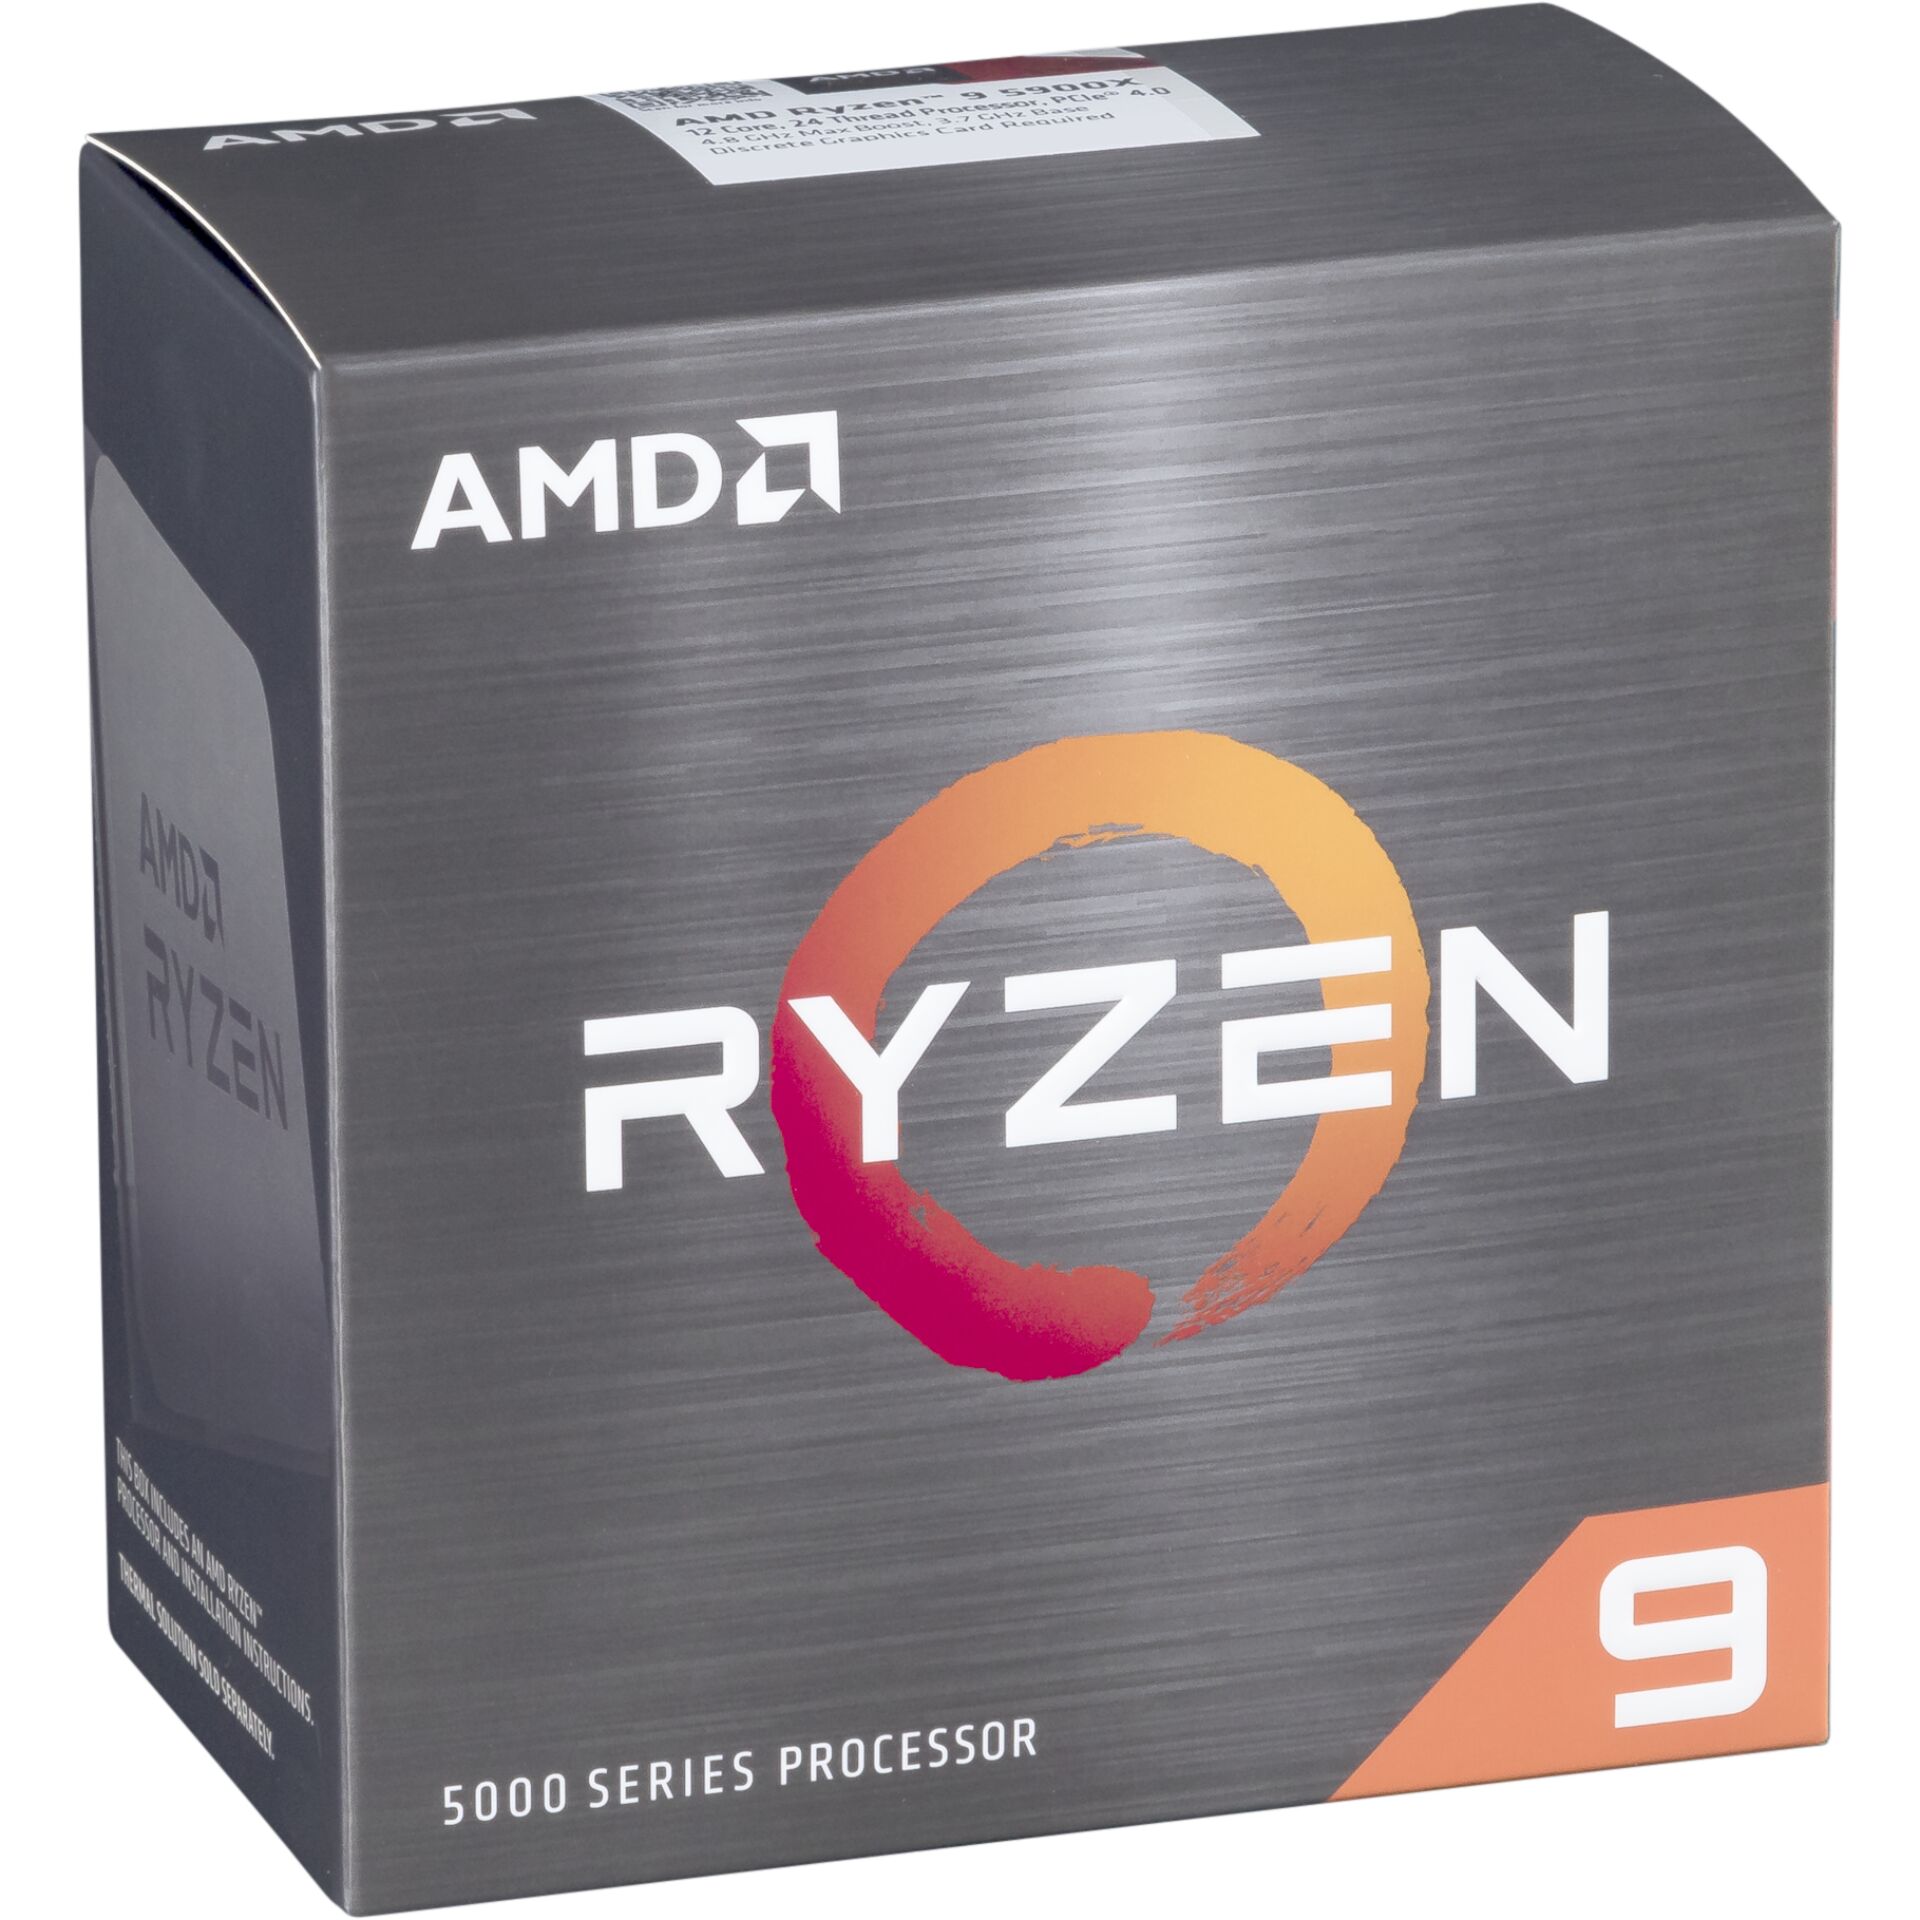 AMD Ryzen 9 5900X, 12C/24T, 3.70-4.80GHz, boxed ohne Kühler, Sockel AM4 (PGA), Vermeer CPU